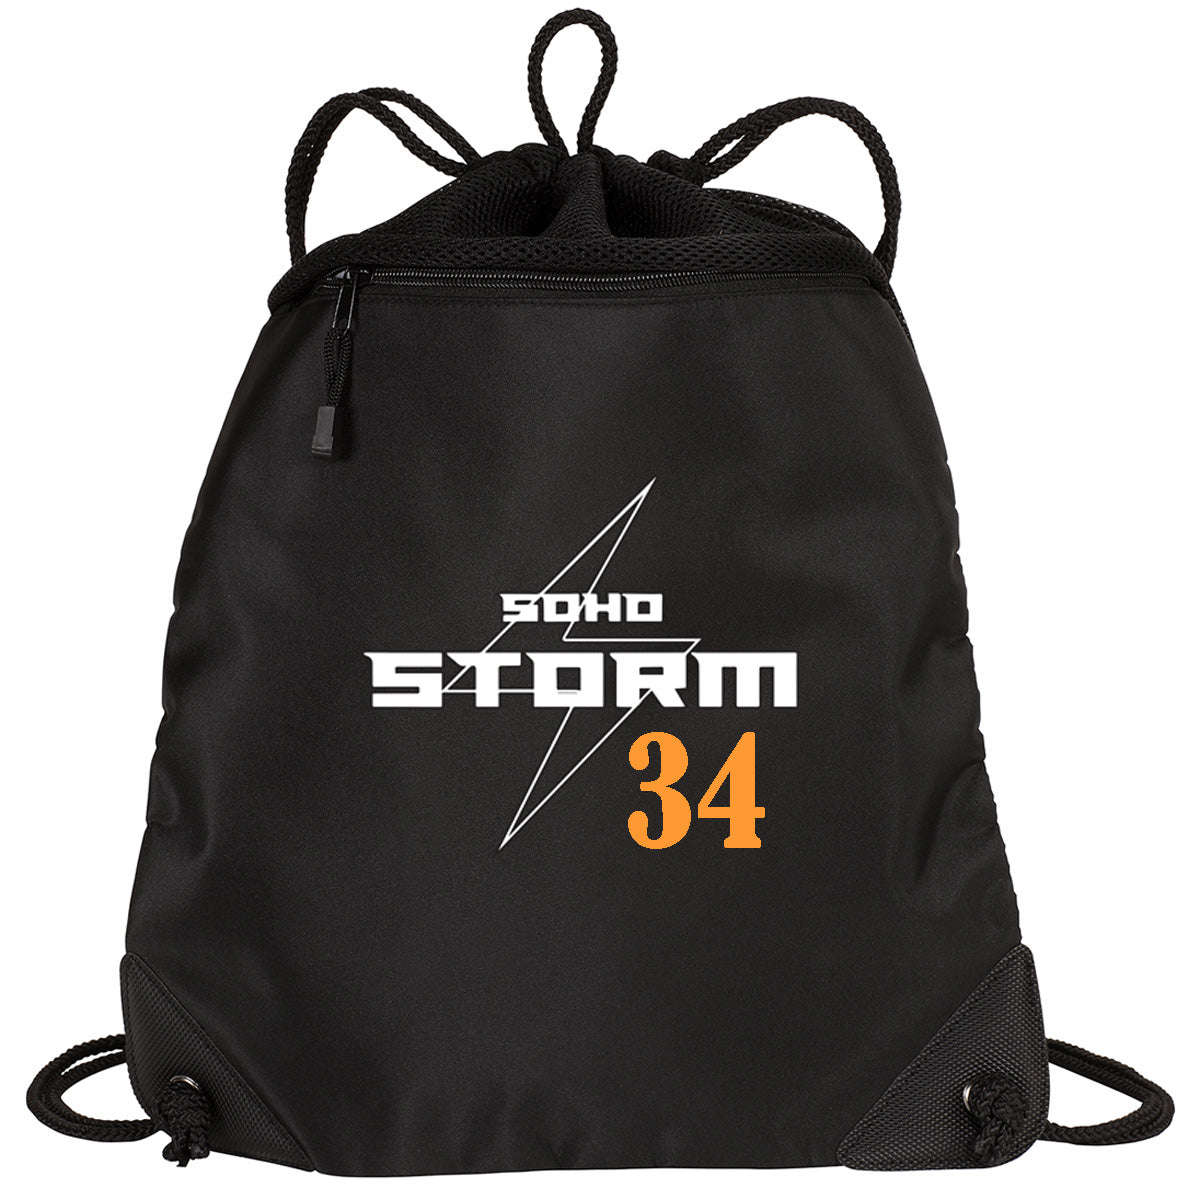 SOHO - Cinch Backpack with SOHO Storm Lightning Bolt Logo - Black (BG810) - Southern Grace Creations